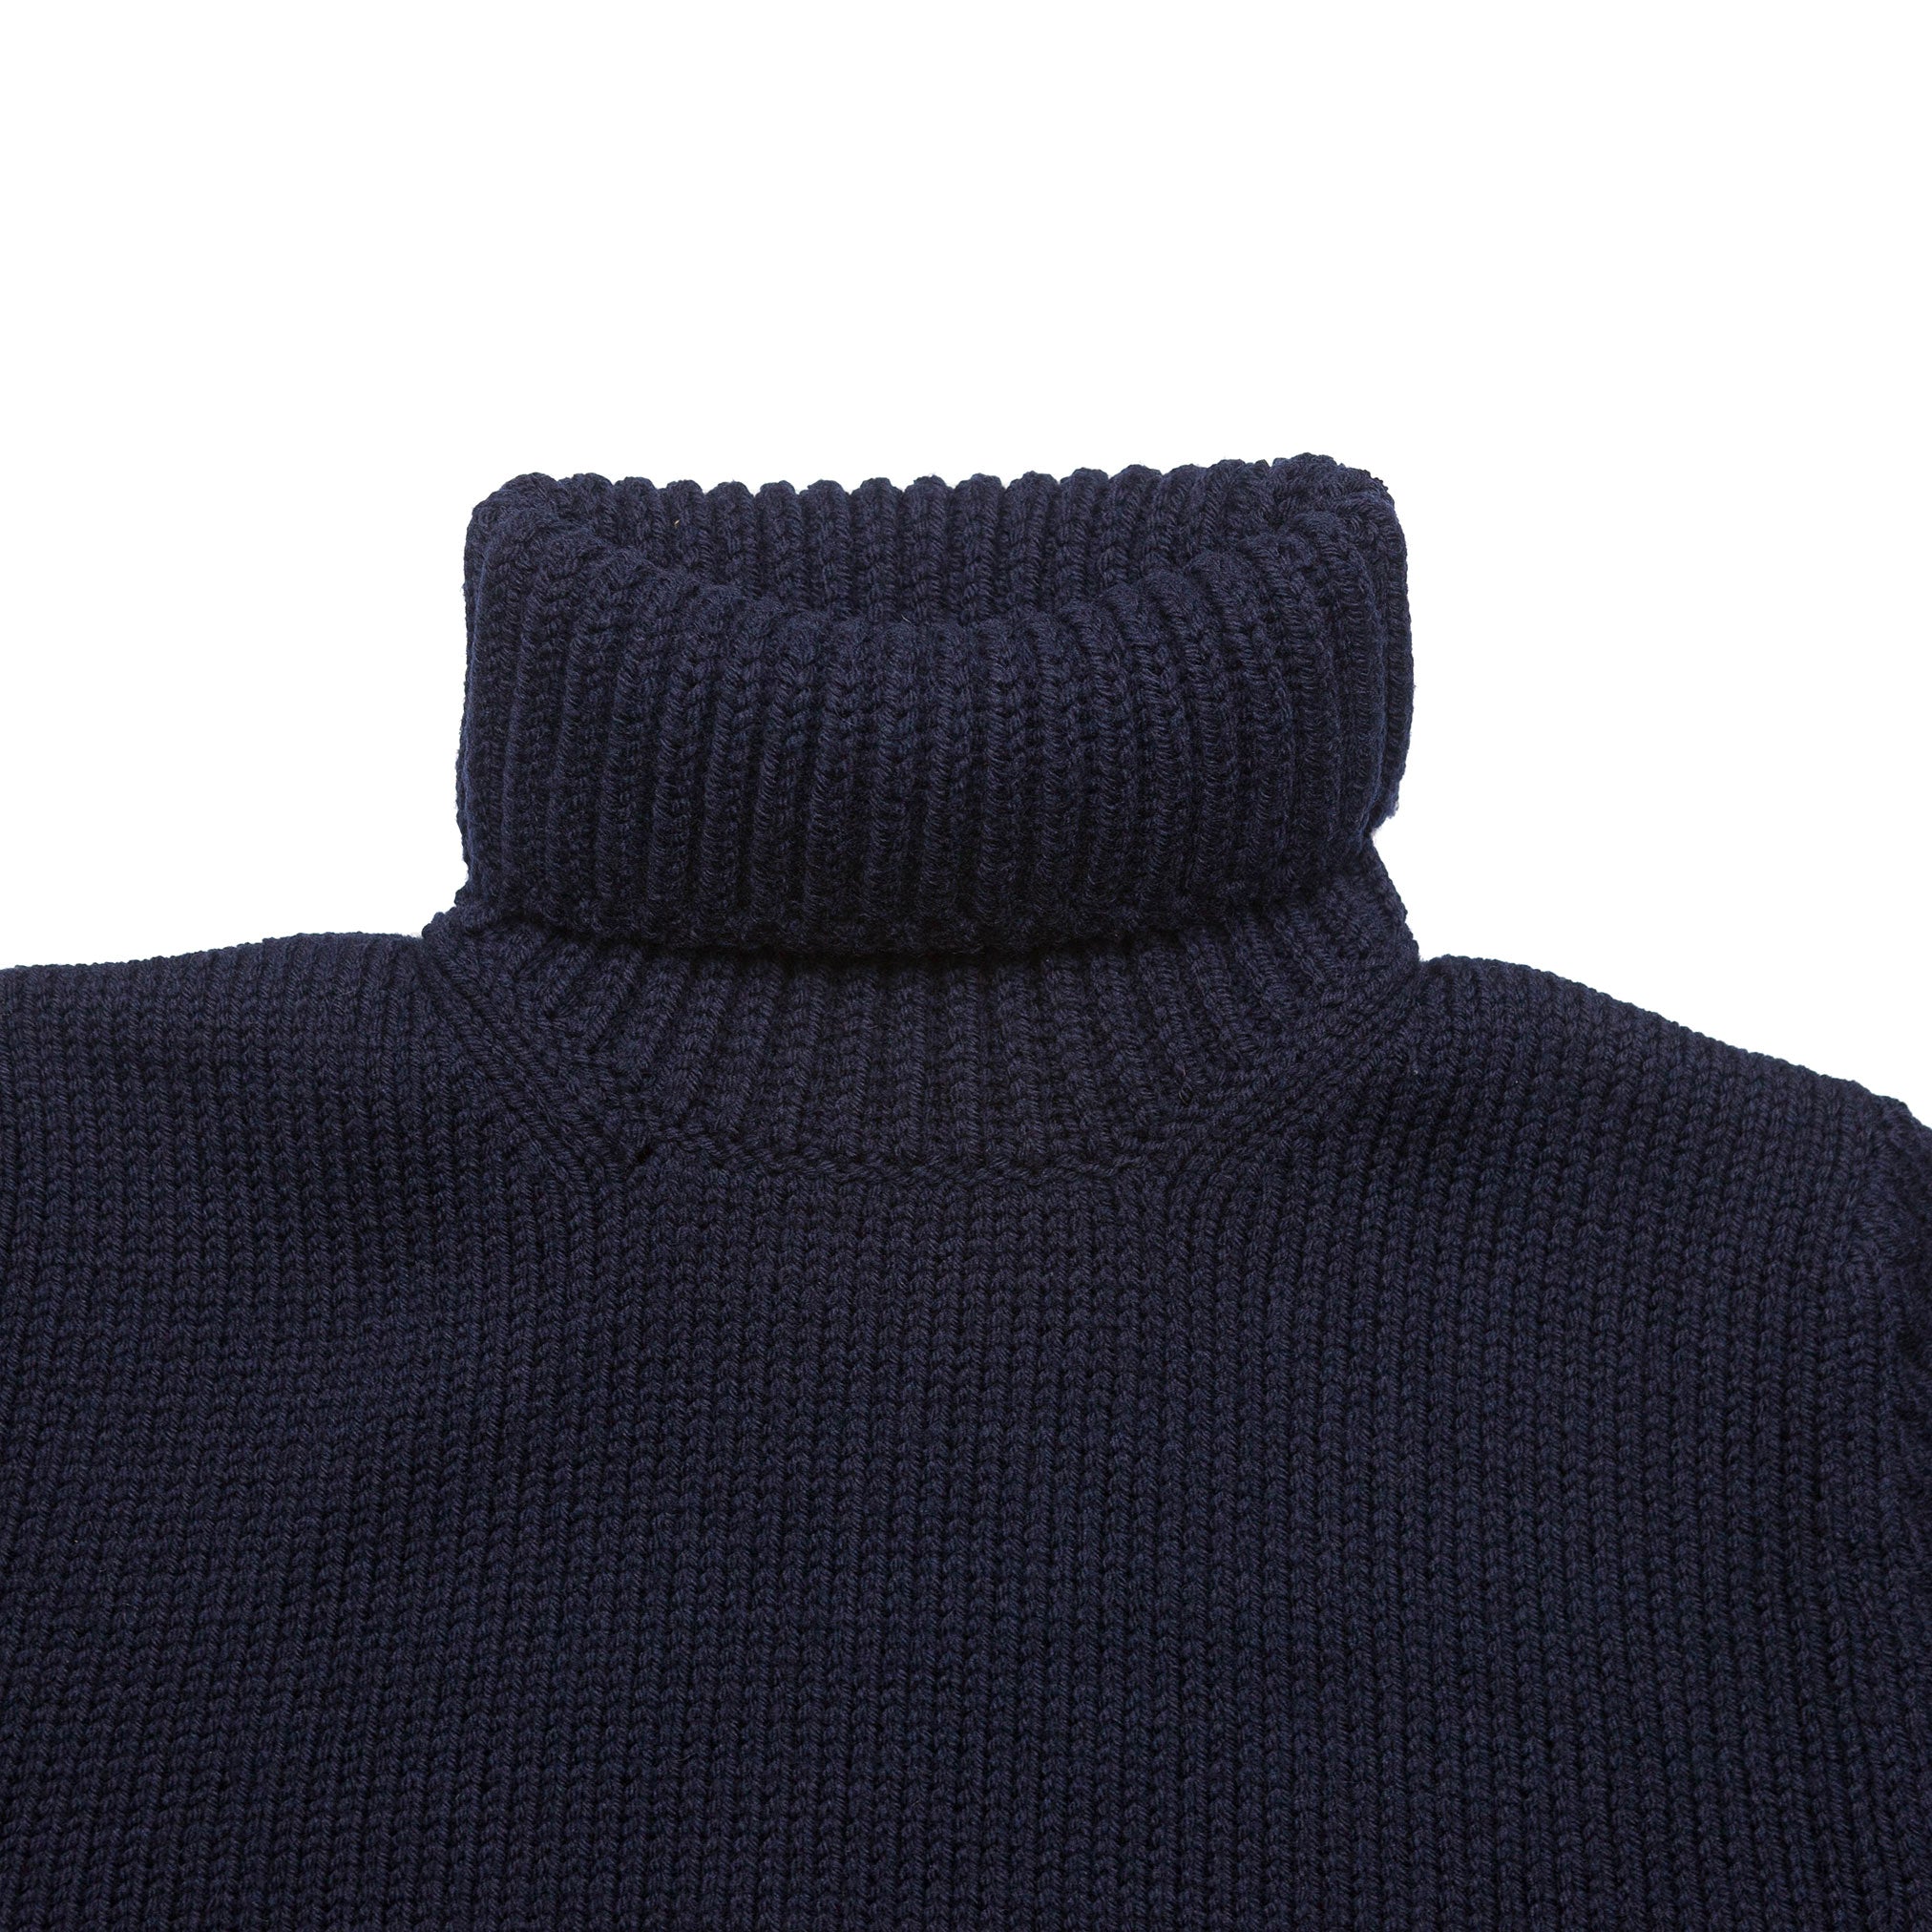 Rollneck Sweater in Navy Wool